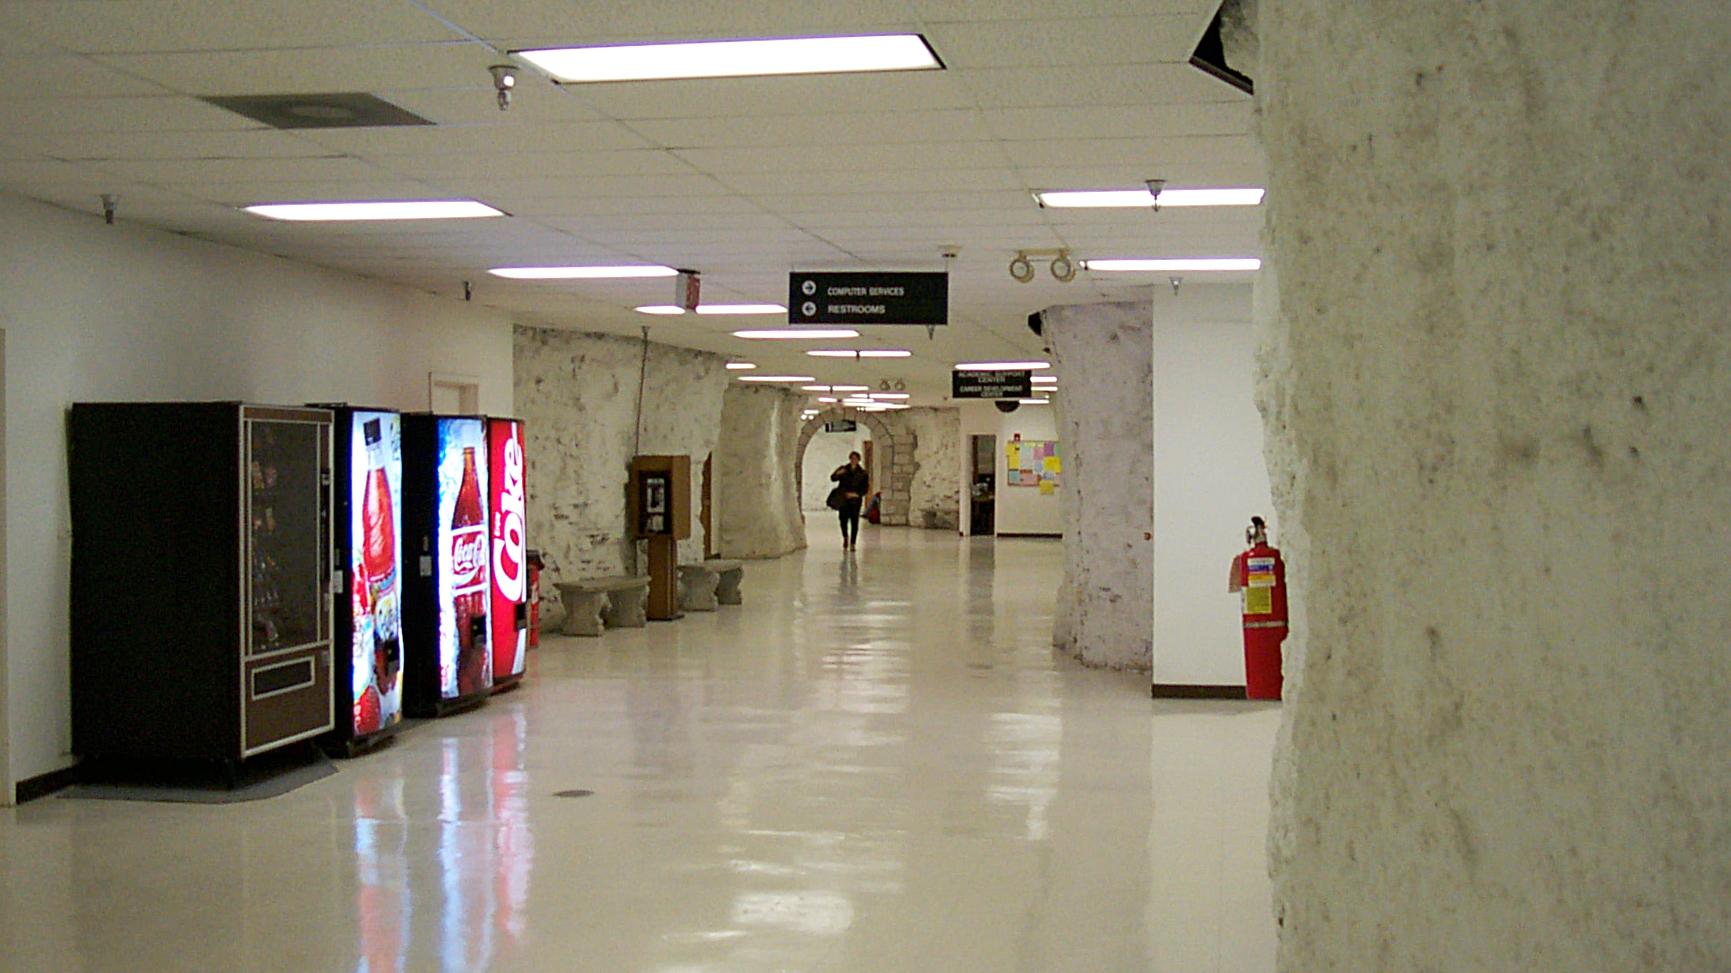 Limestone-lined hallway in the Park University's underground campus.